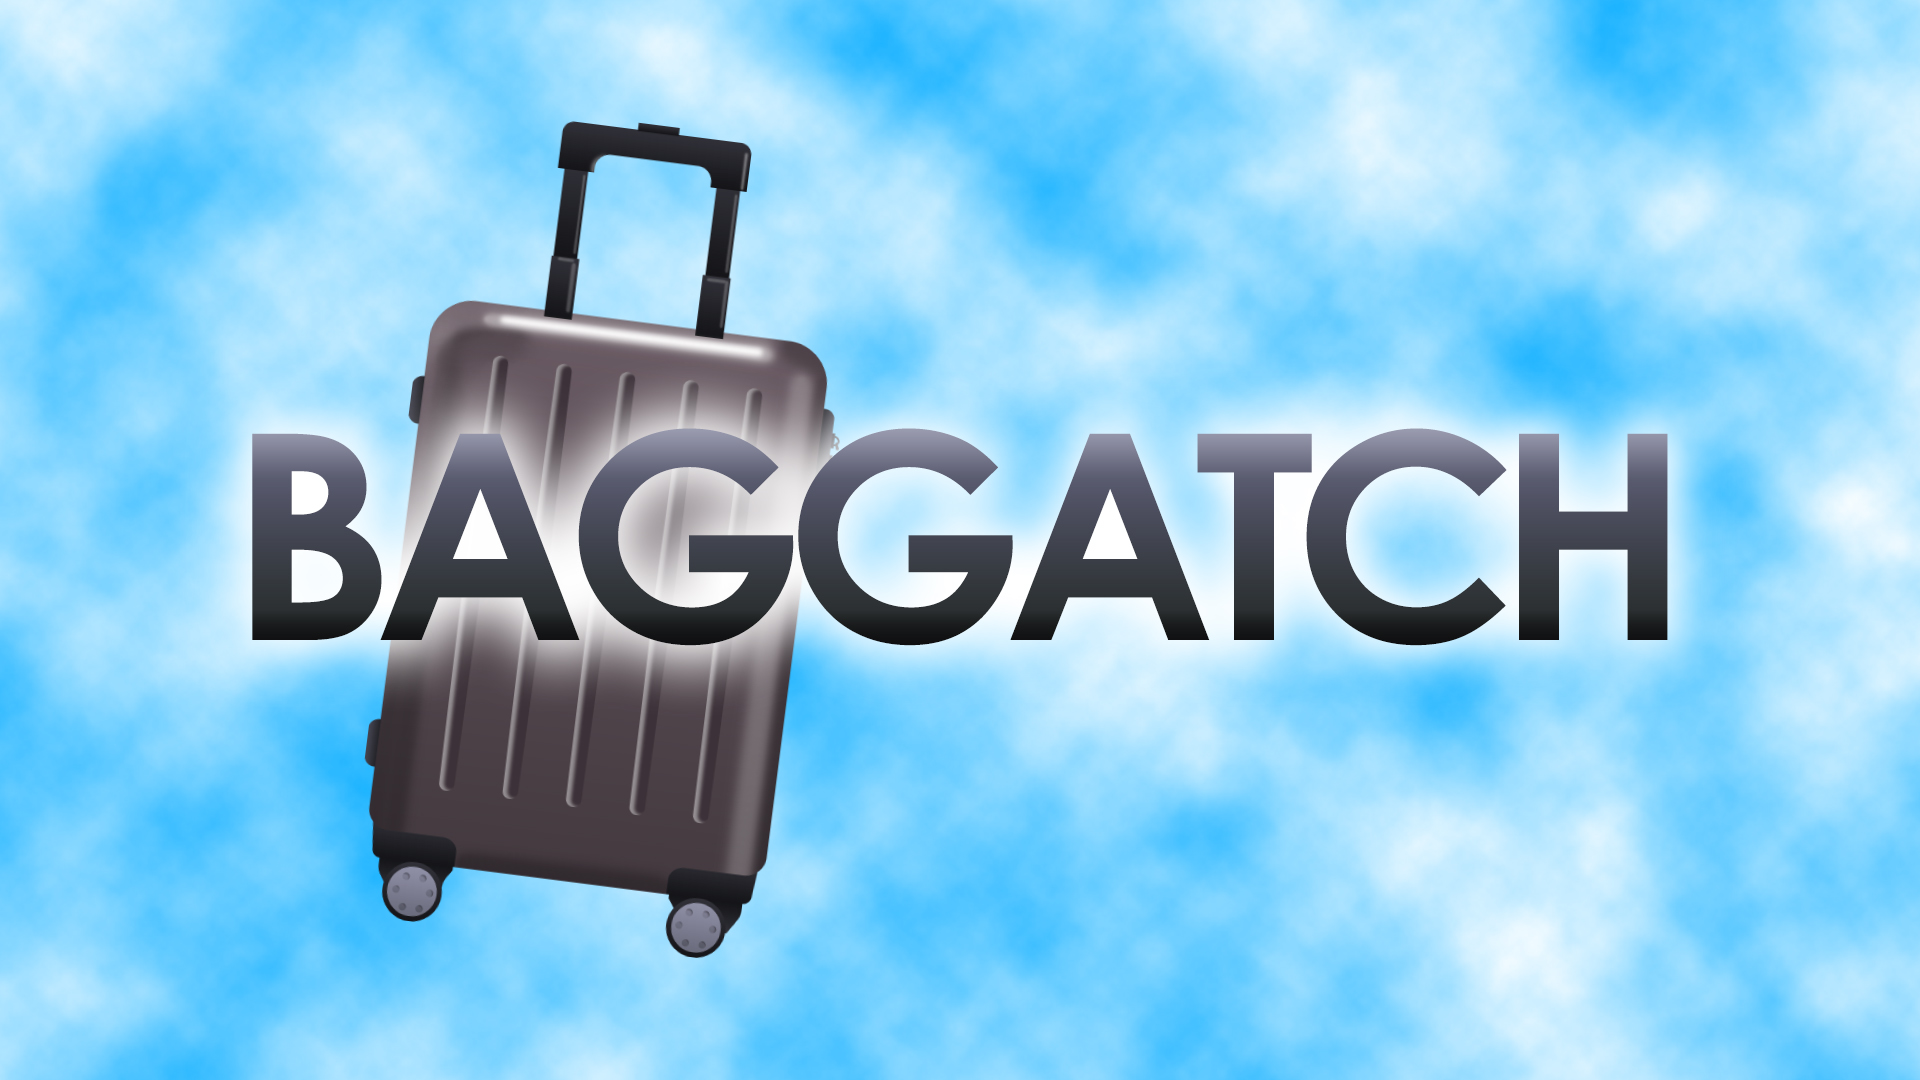 Baggatch